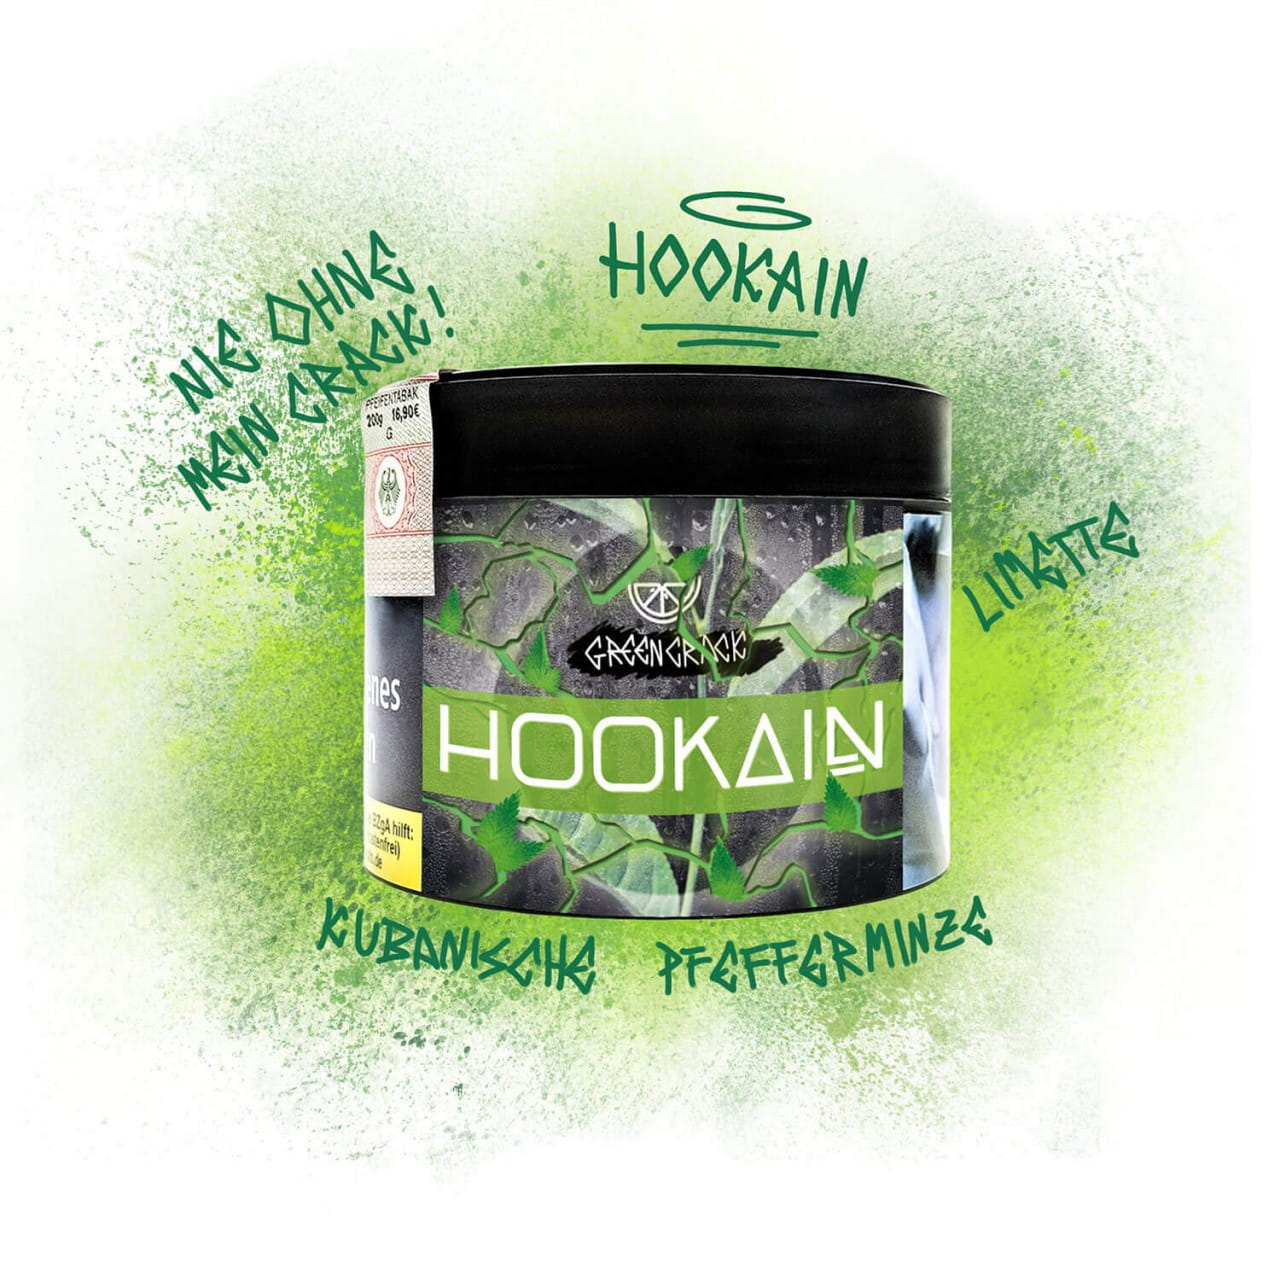 Hookain Tabak - Green Crack 200 g unter ohne Angabe